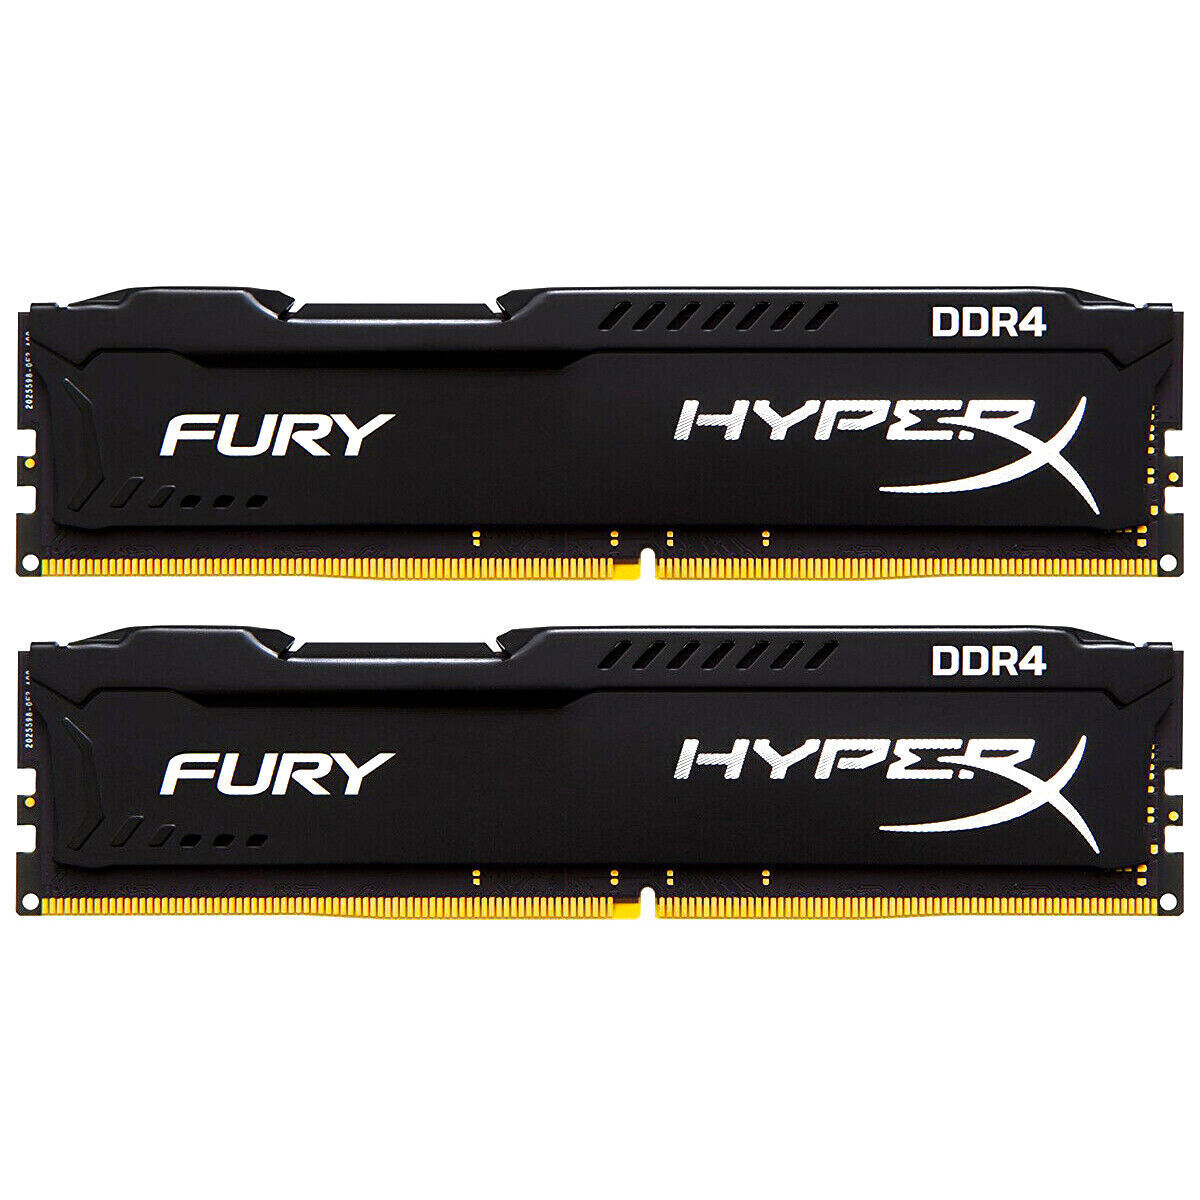 HyperX FURY DDR4 16GB 3200 MHz PC4-25600 Desktop RAM Memory DIMM 288pin 2x 16GB